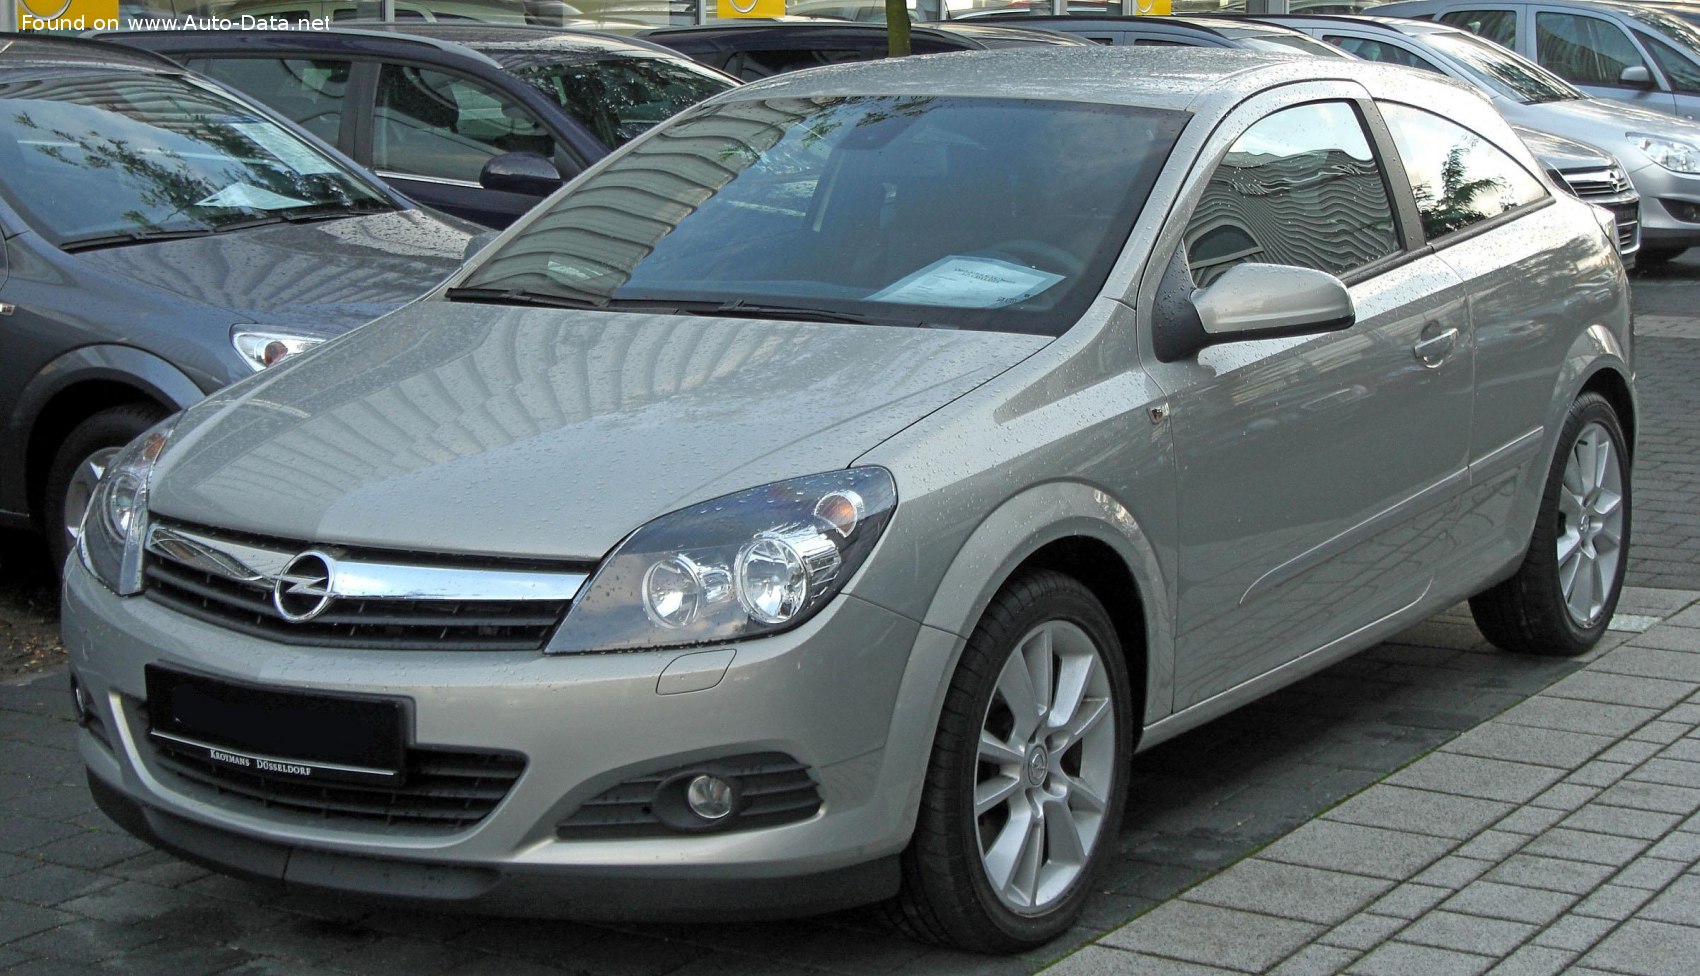 2005 Opel Astra H GTC 1.9 CDTI (120 PS)